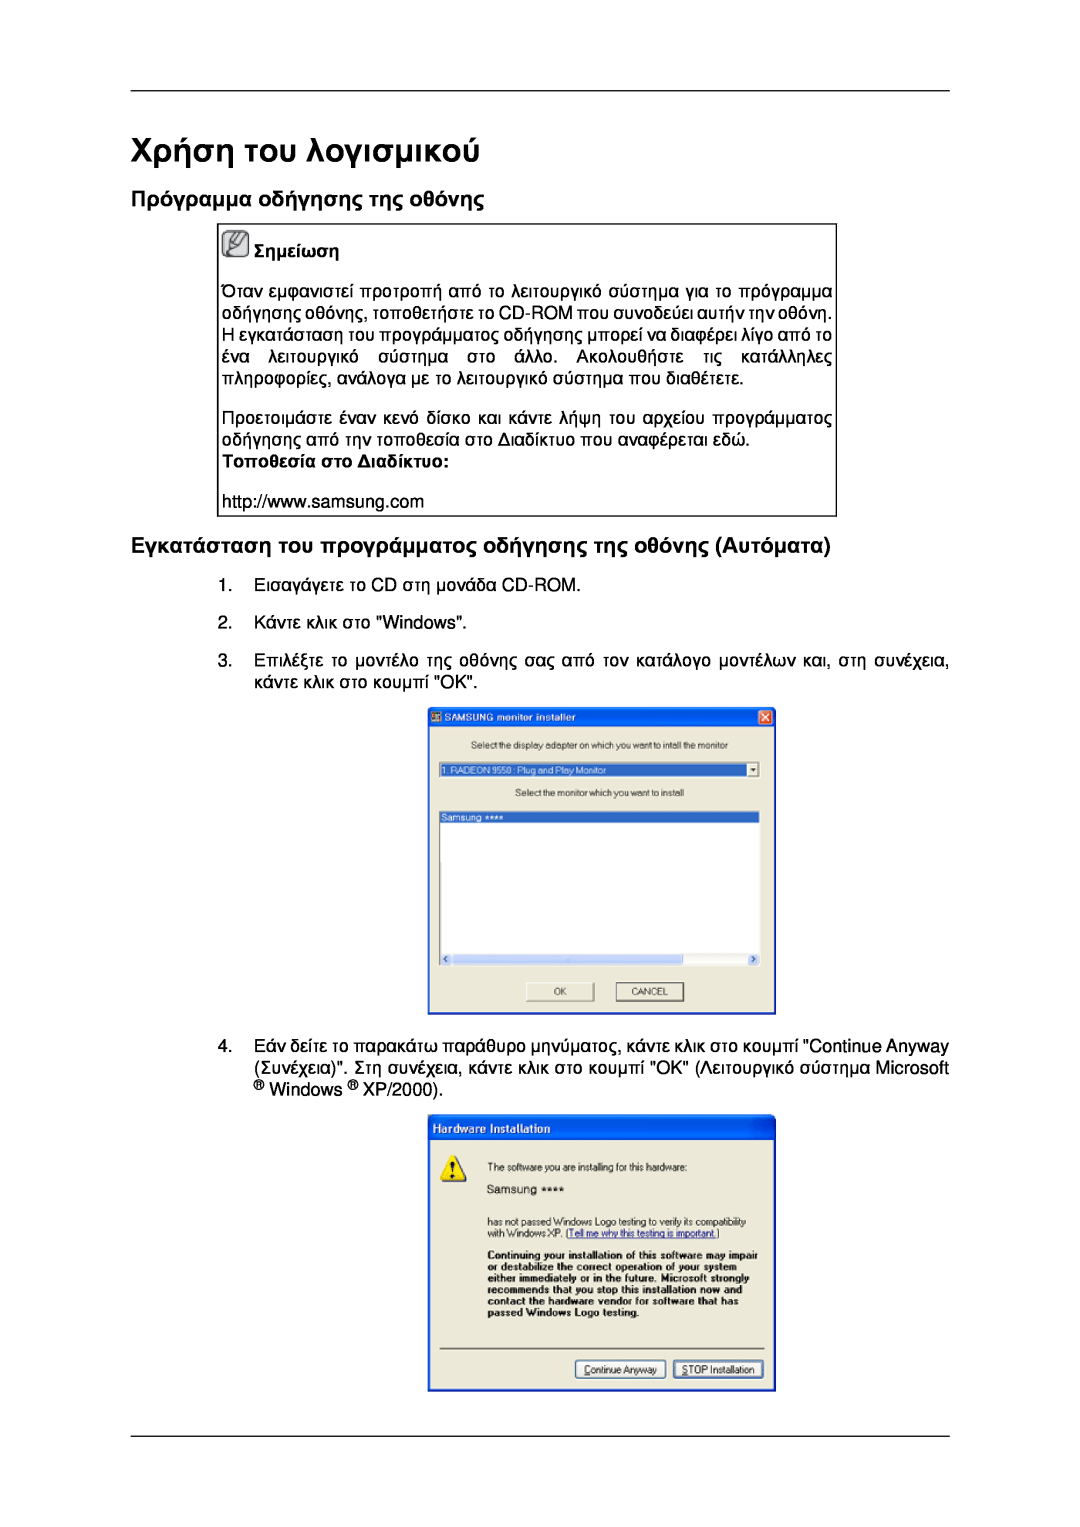 Samsung LH40MRPLBF/EN manual Χρήση του λογισμικού, Πρόγραμμα οδήγησης της οθόνης, Τοποθεσία στο Διαδίκτυο, Σημείωση 